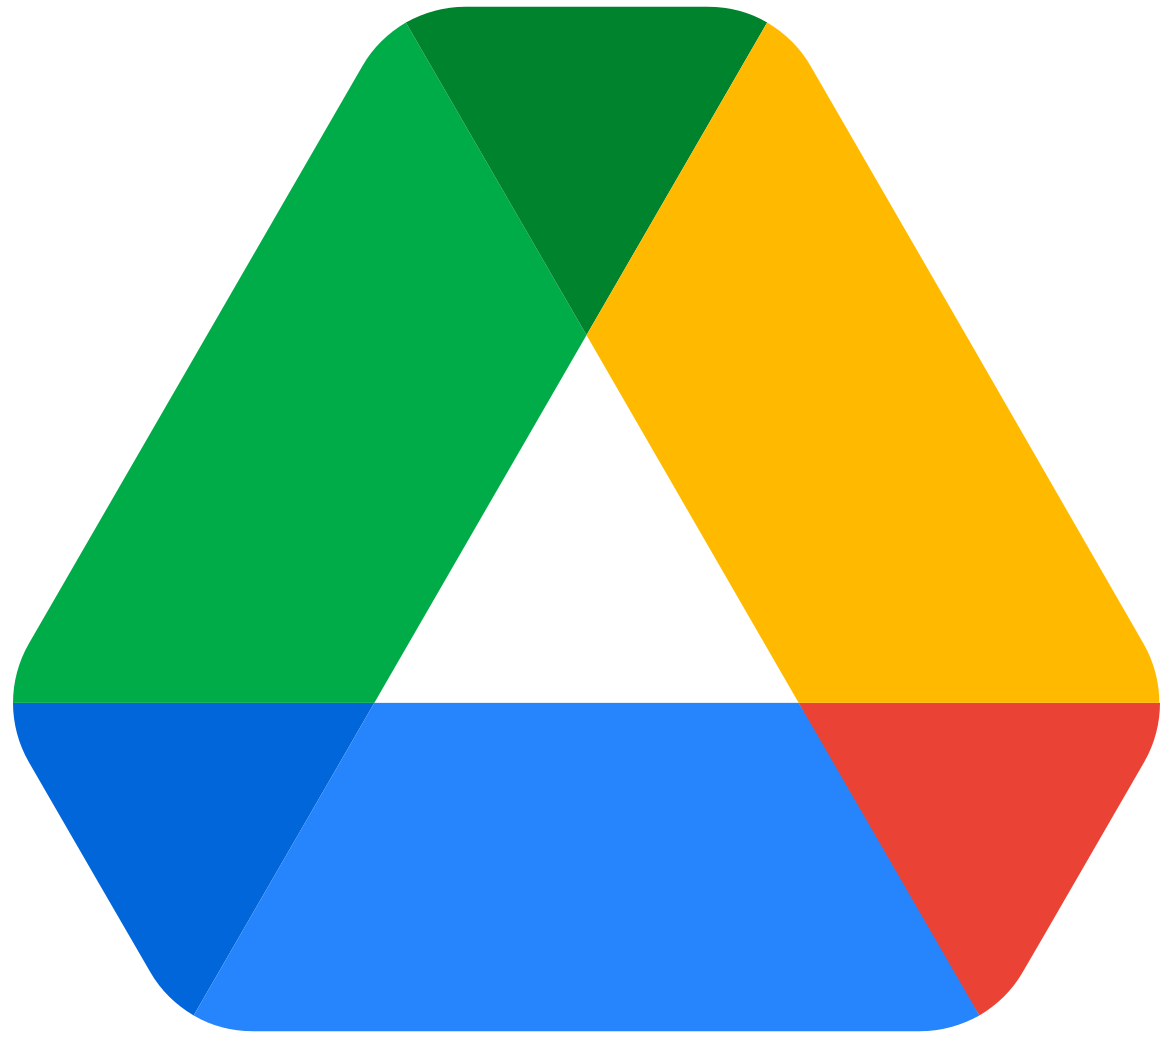 Google_Drive_logo